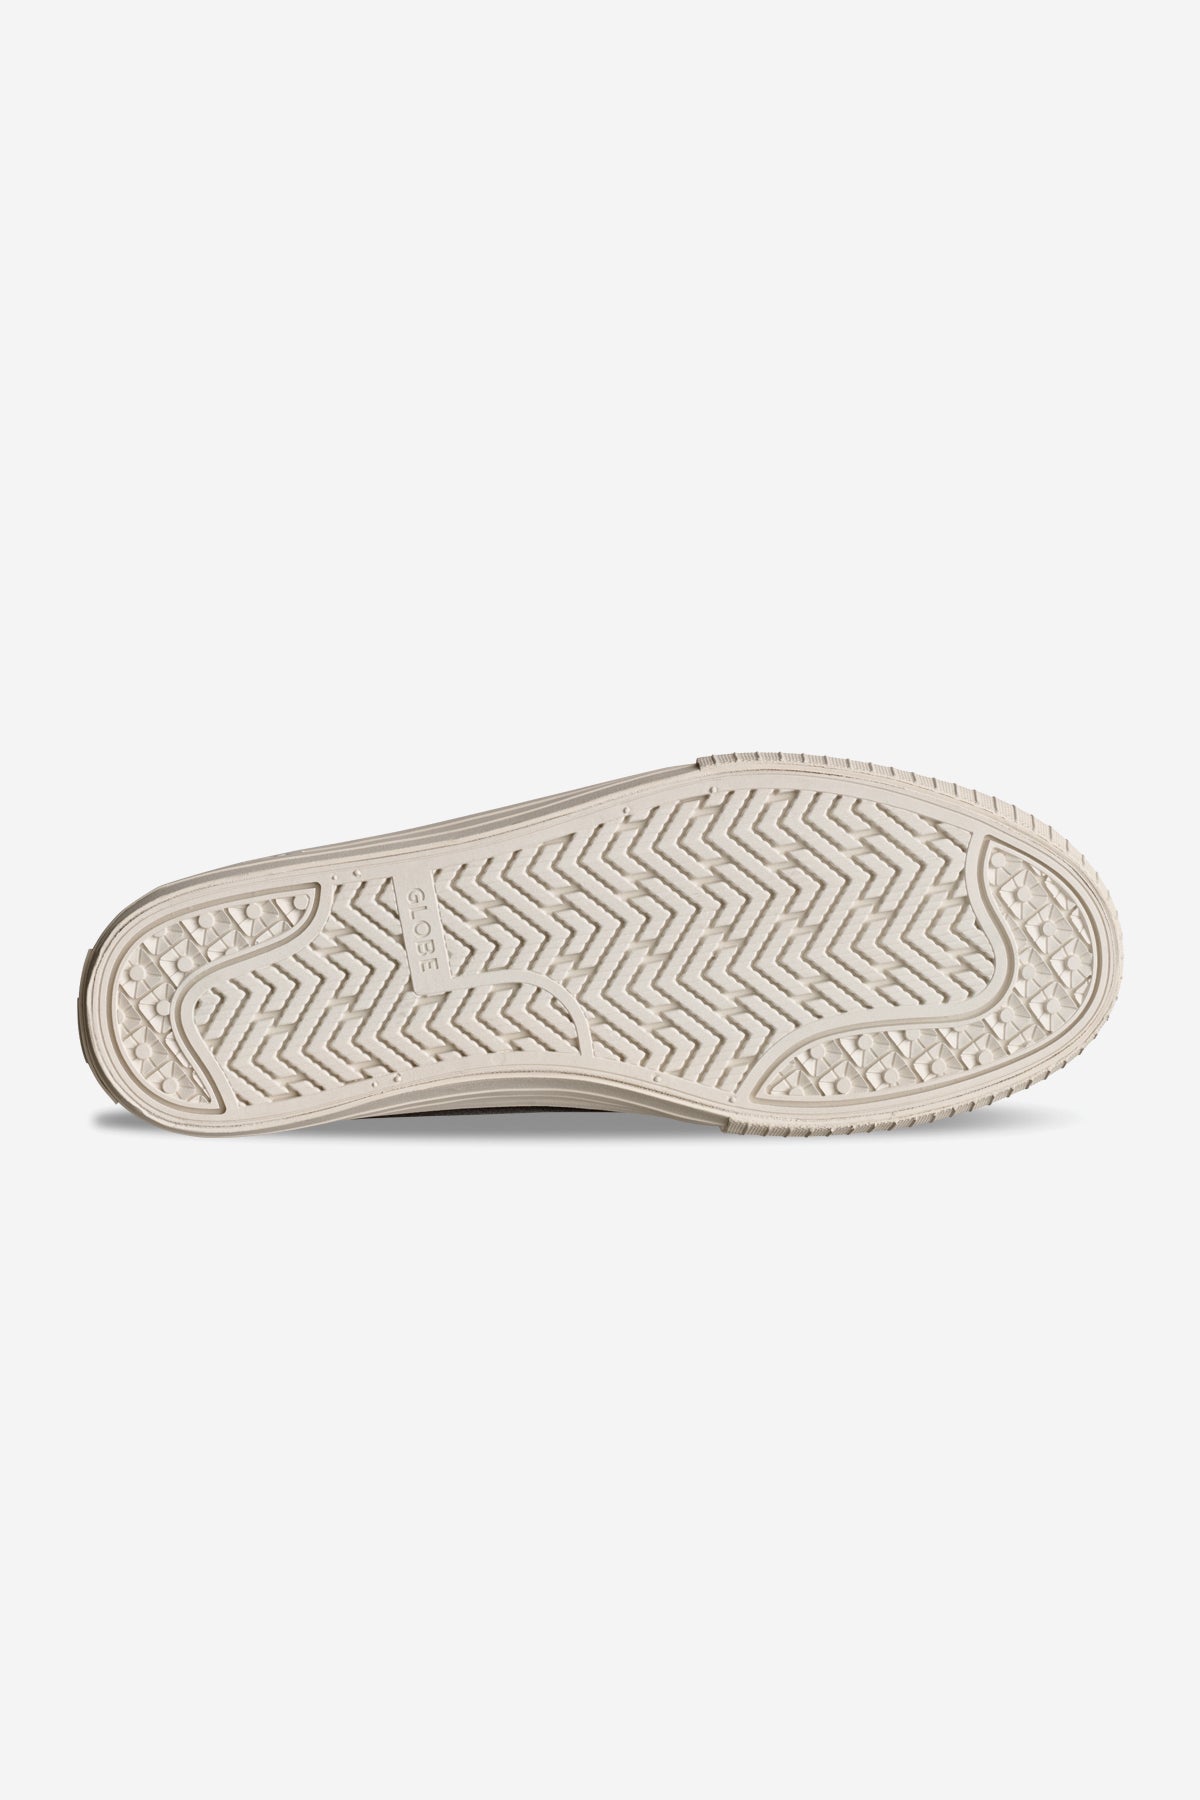 Globe - Gillette Mid - Negro/Crema - skateboard Zapatos